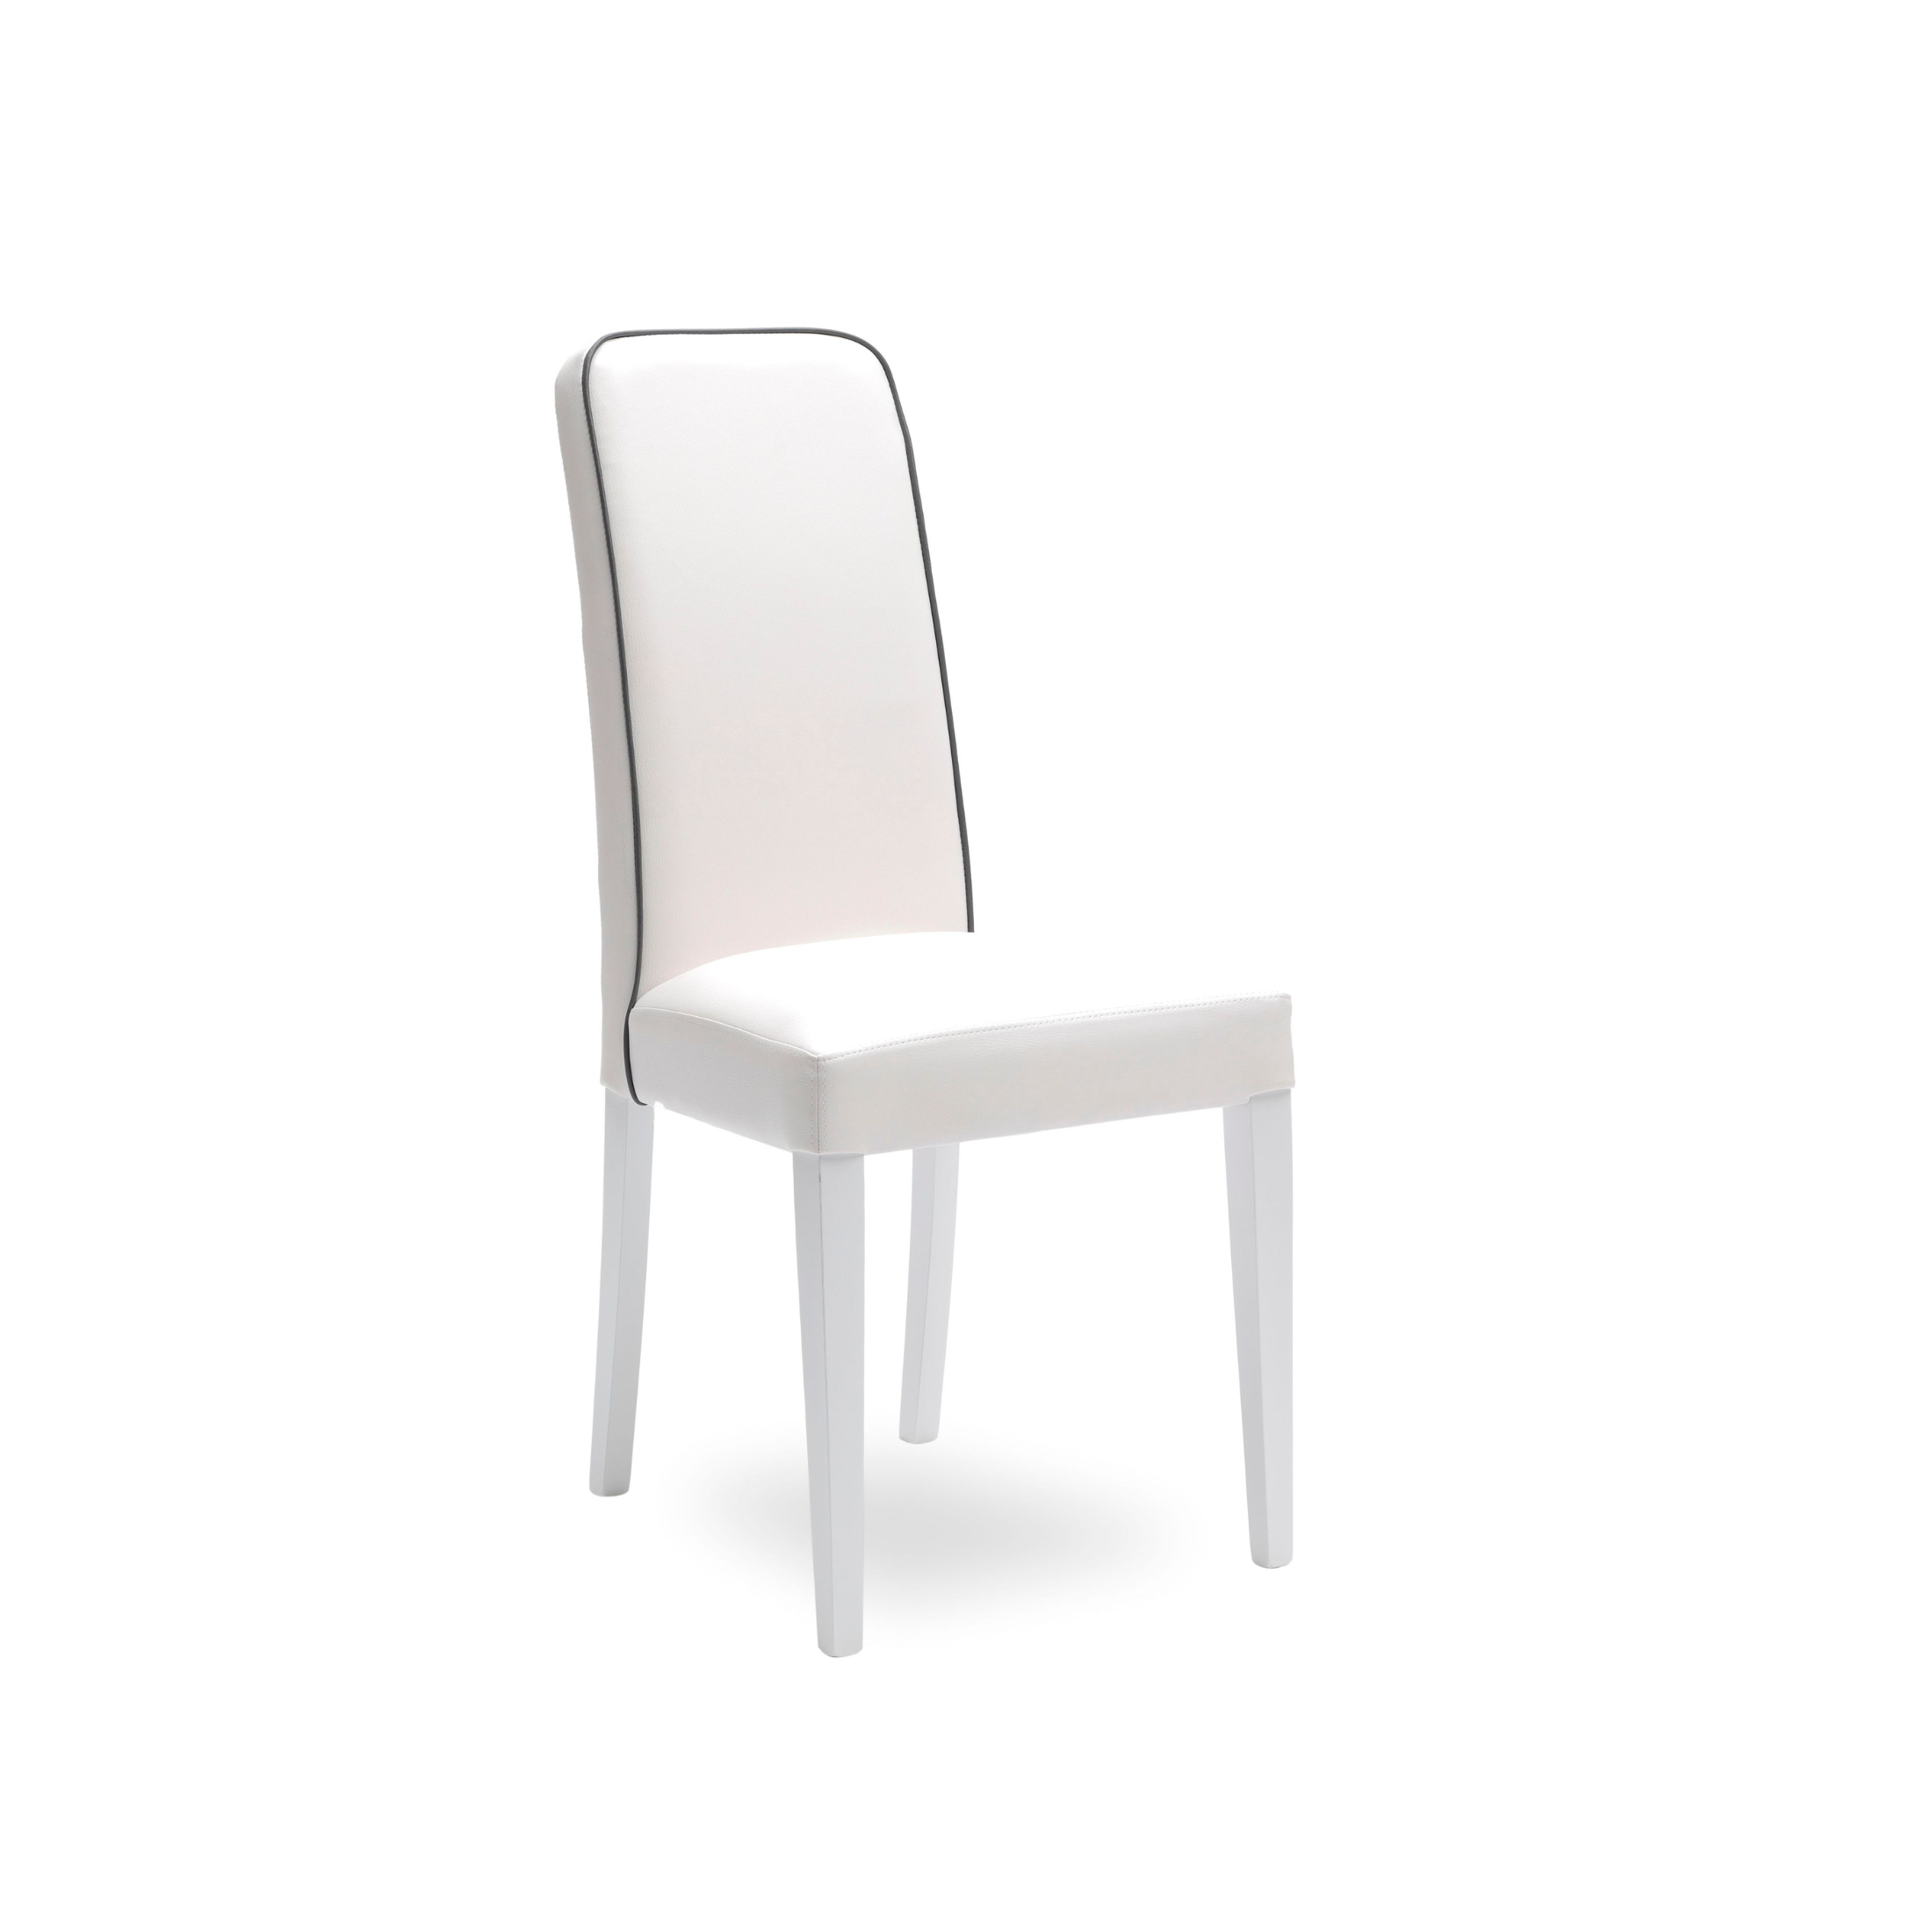 Set sedie imbottite da soggiorno "Anita" moderne in similpelle cm 46x59 99h